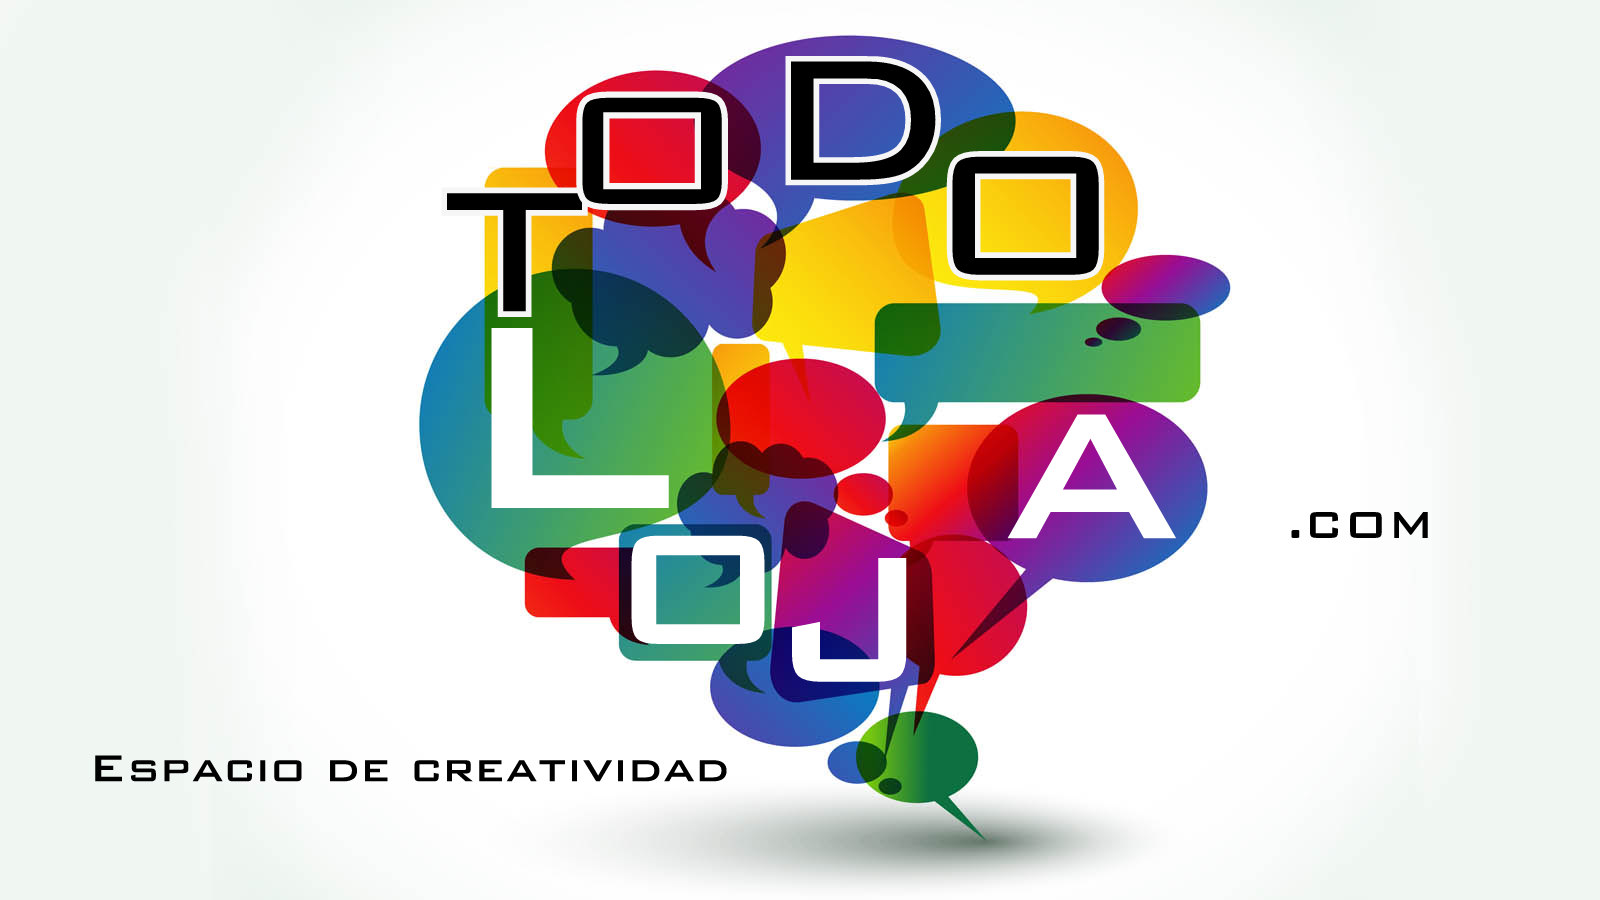 Creativity in Loja